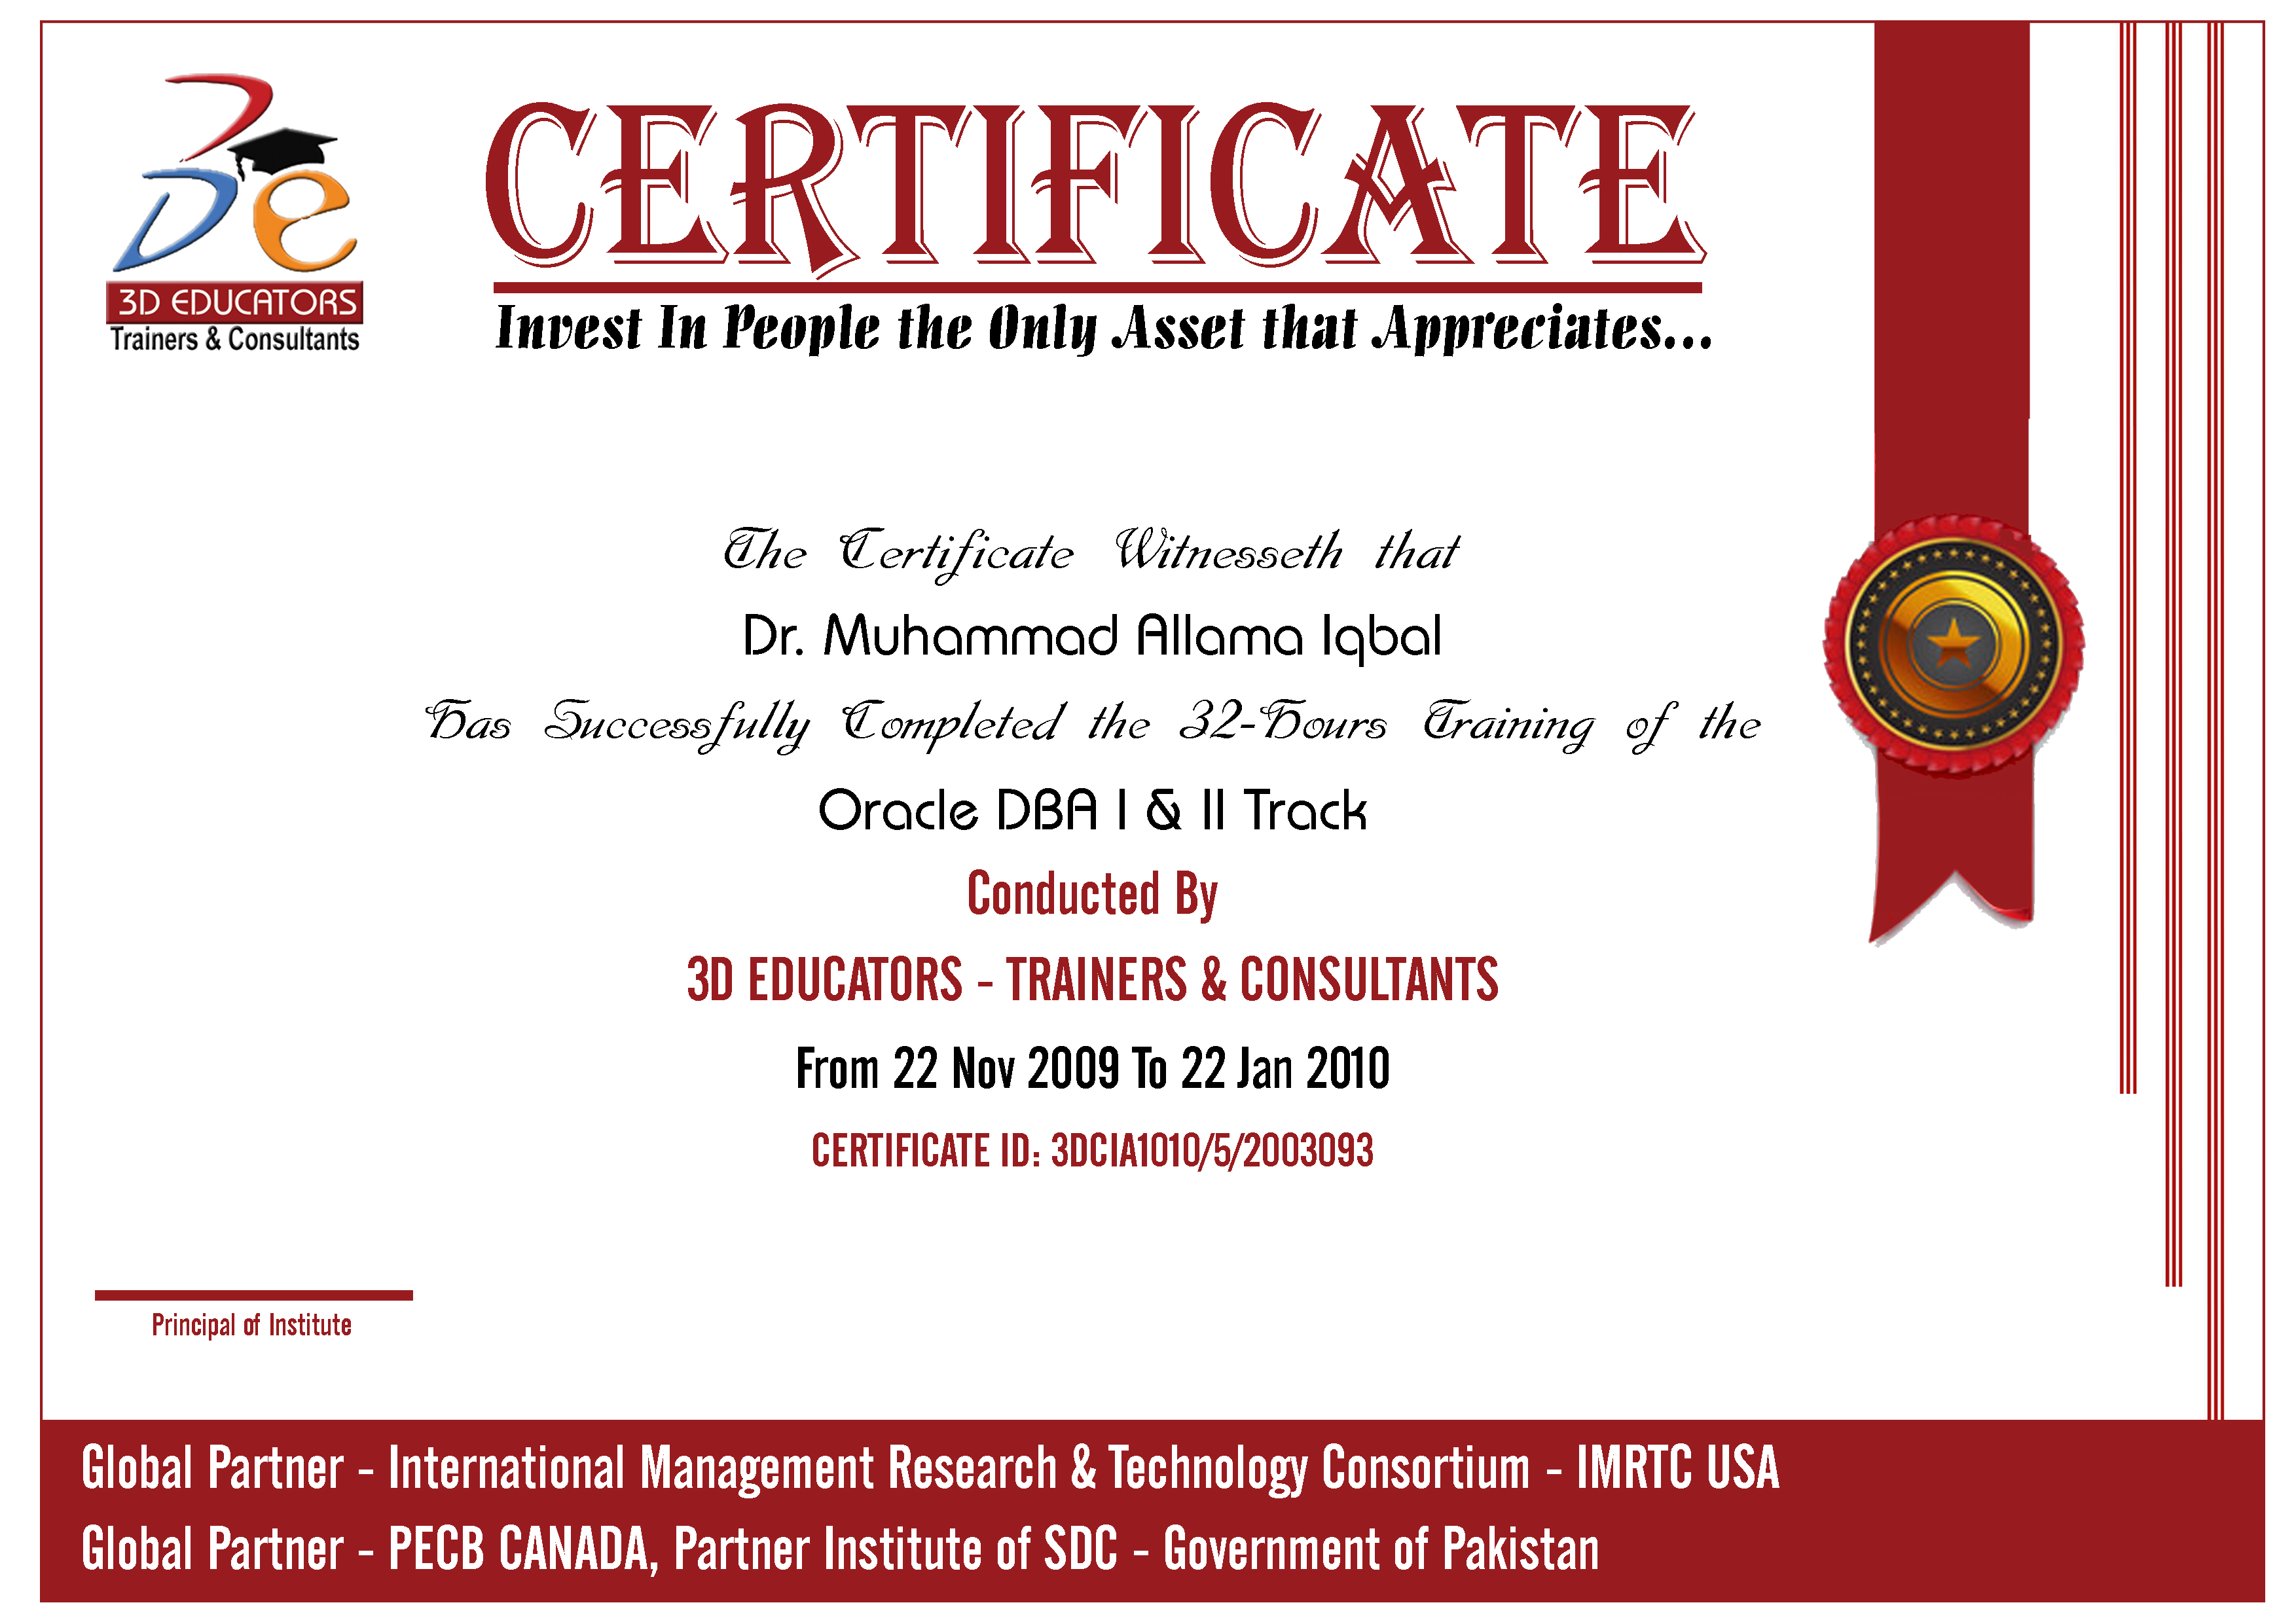 ORACLE 19c DBA 2 Training Sample Certificate